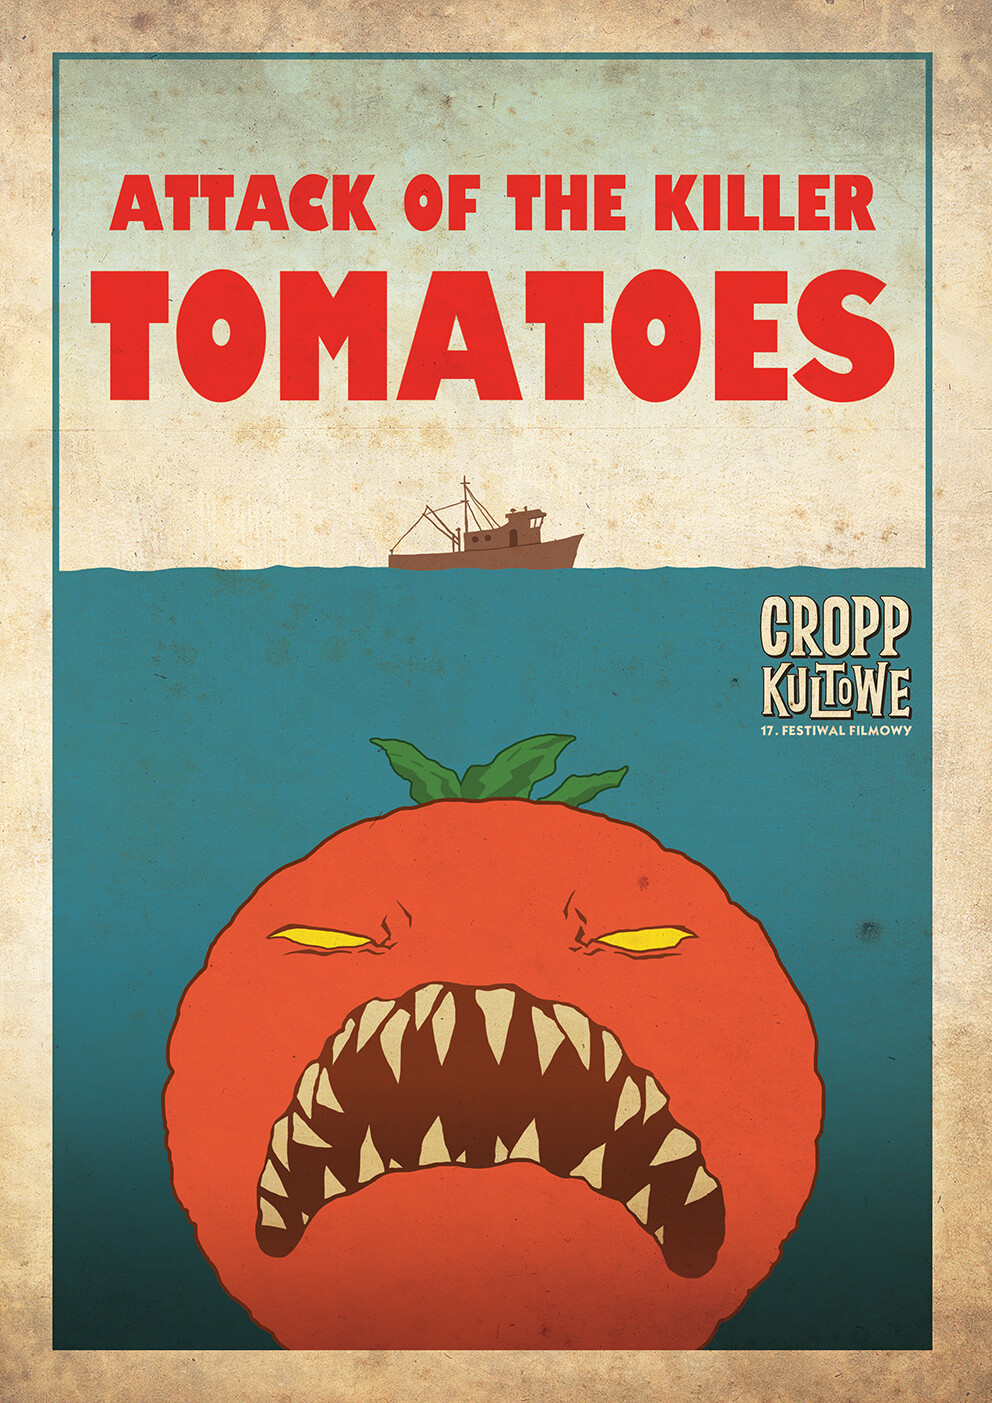 Нападение помидоров. Атака помидоров-убийц 1978. Нападение помидоров-убийц 1978 Постер. Attack of the Killer Tomatoes Постер.